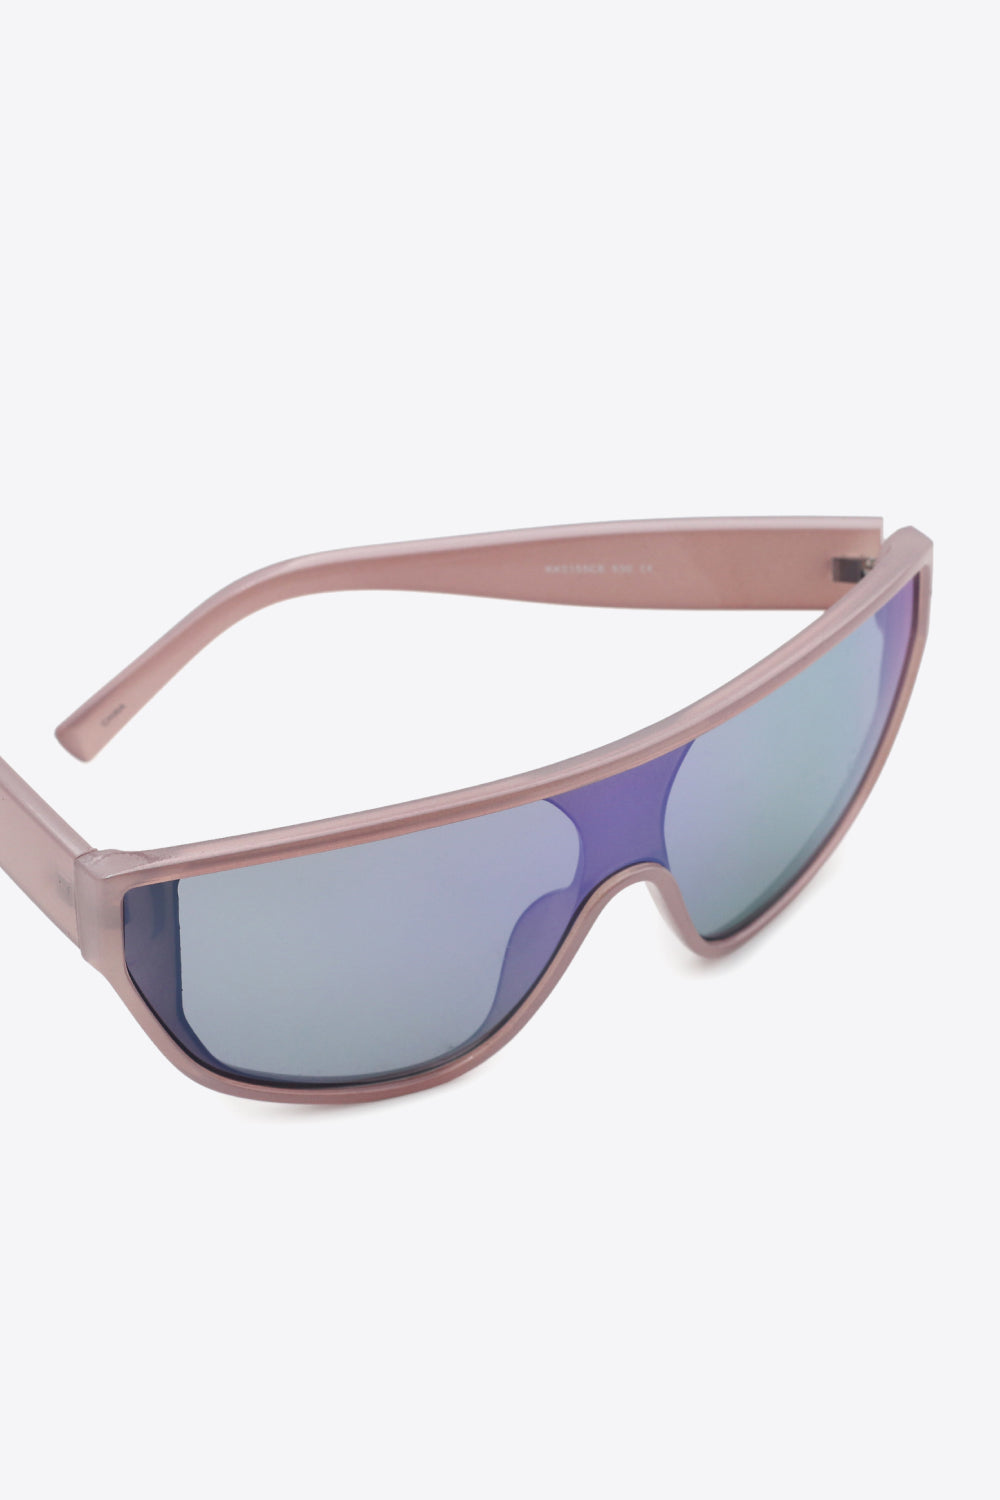 UV400 Polycarbonate Wayfarer Sunglasses Print on any thing USA/STOD clothes